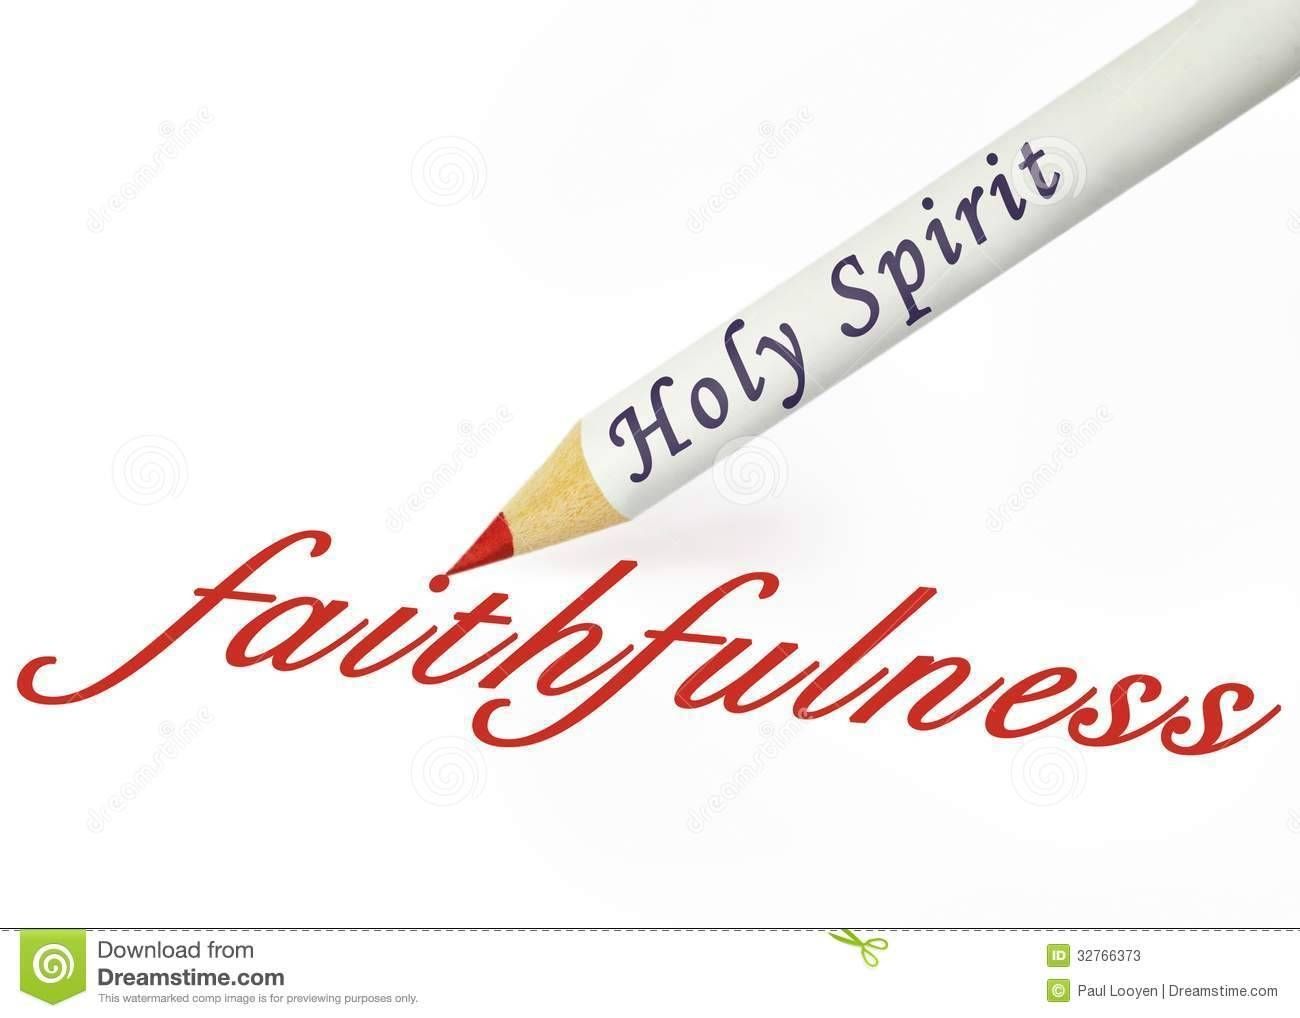 Hs Faithfulness Stock Image (View 28 of 30)